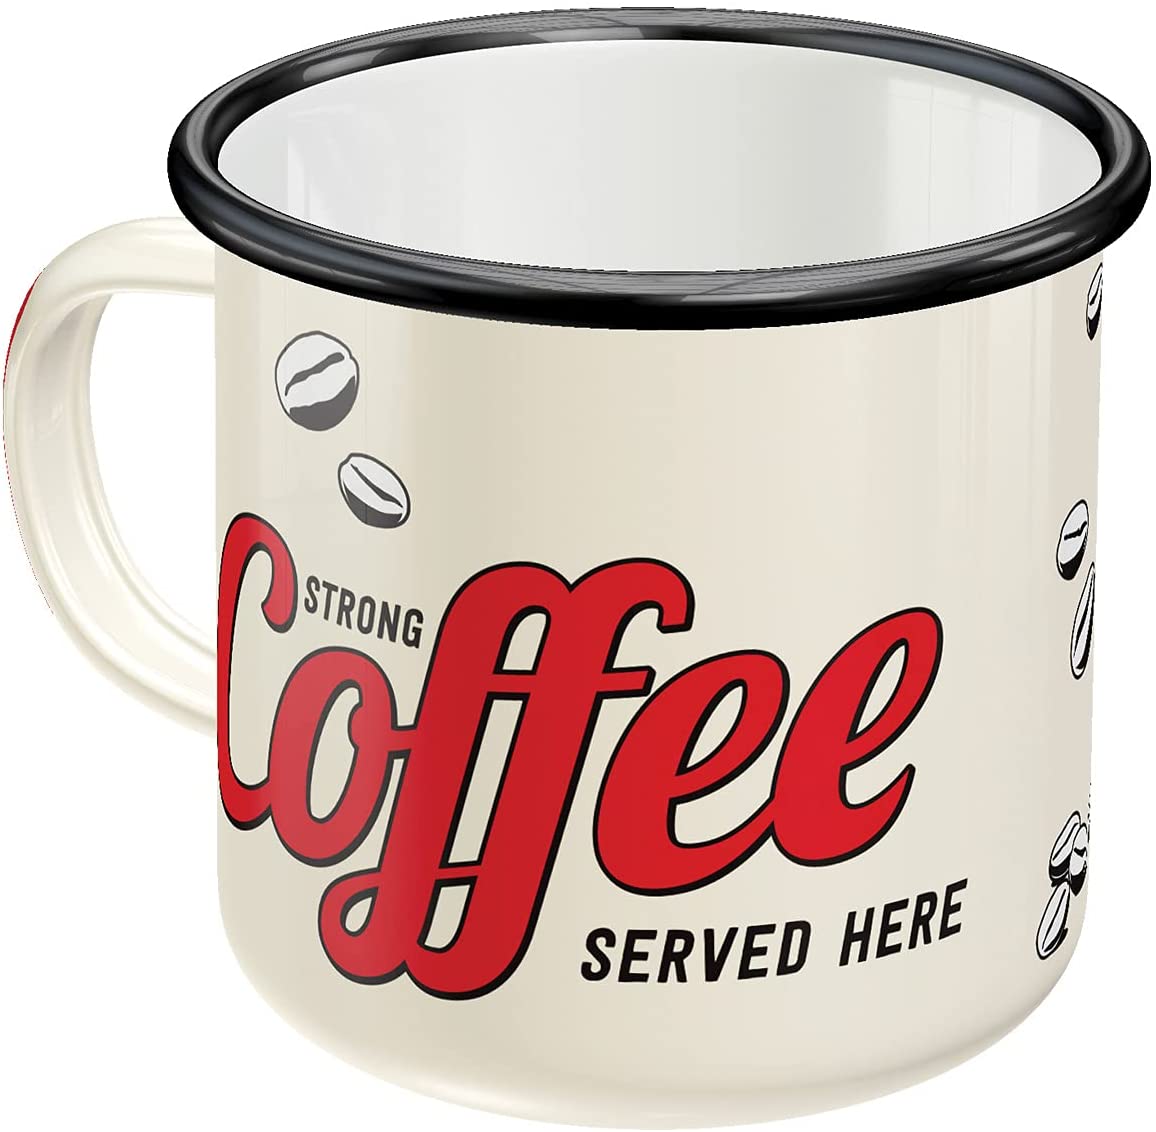 Nostalgic-Art, Retro Enamel Mug Strong Coffee Served Here - Gift Idea for Coffee Lovers Camping Mug Vintage Design 12 oz